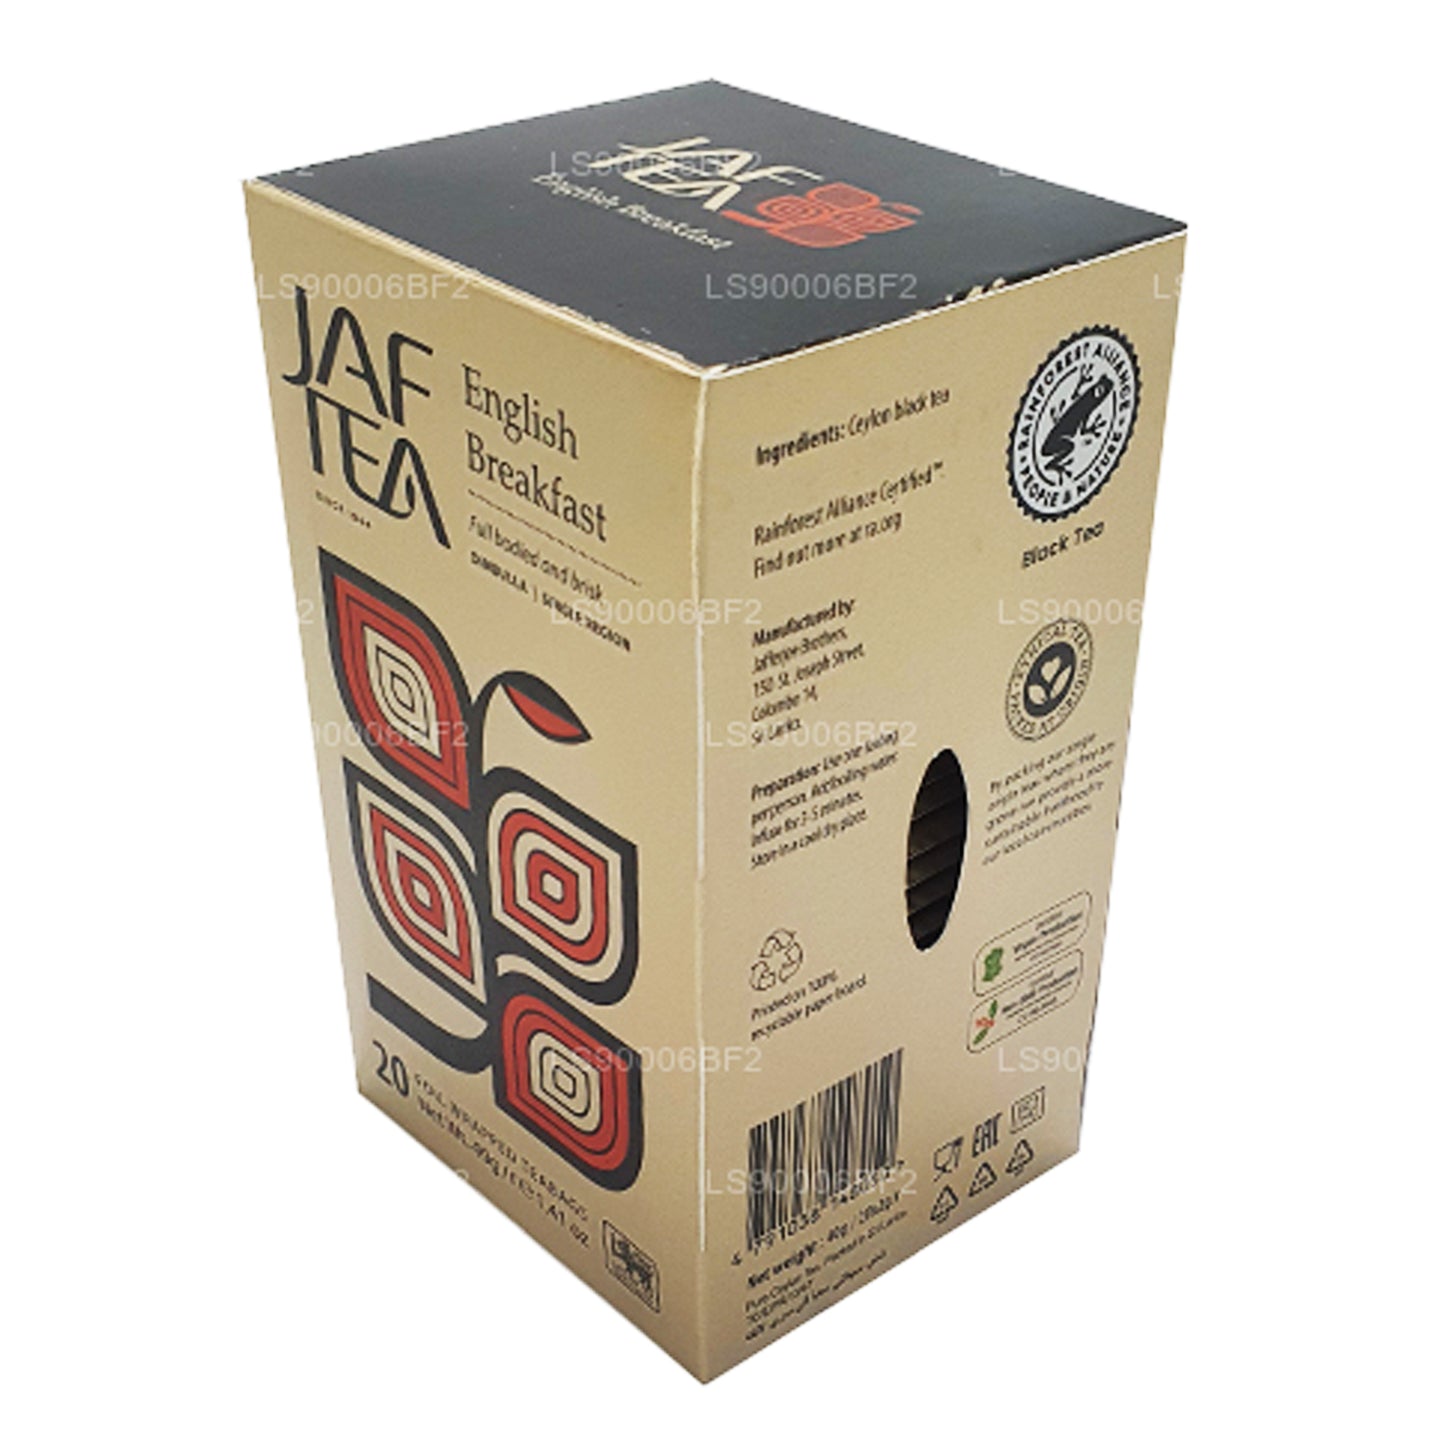 Jaf Tea English Breakfast (40g) 20 Foil Envelop Tea Bags